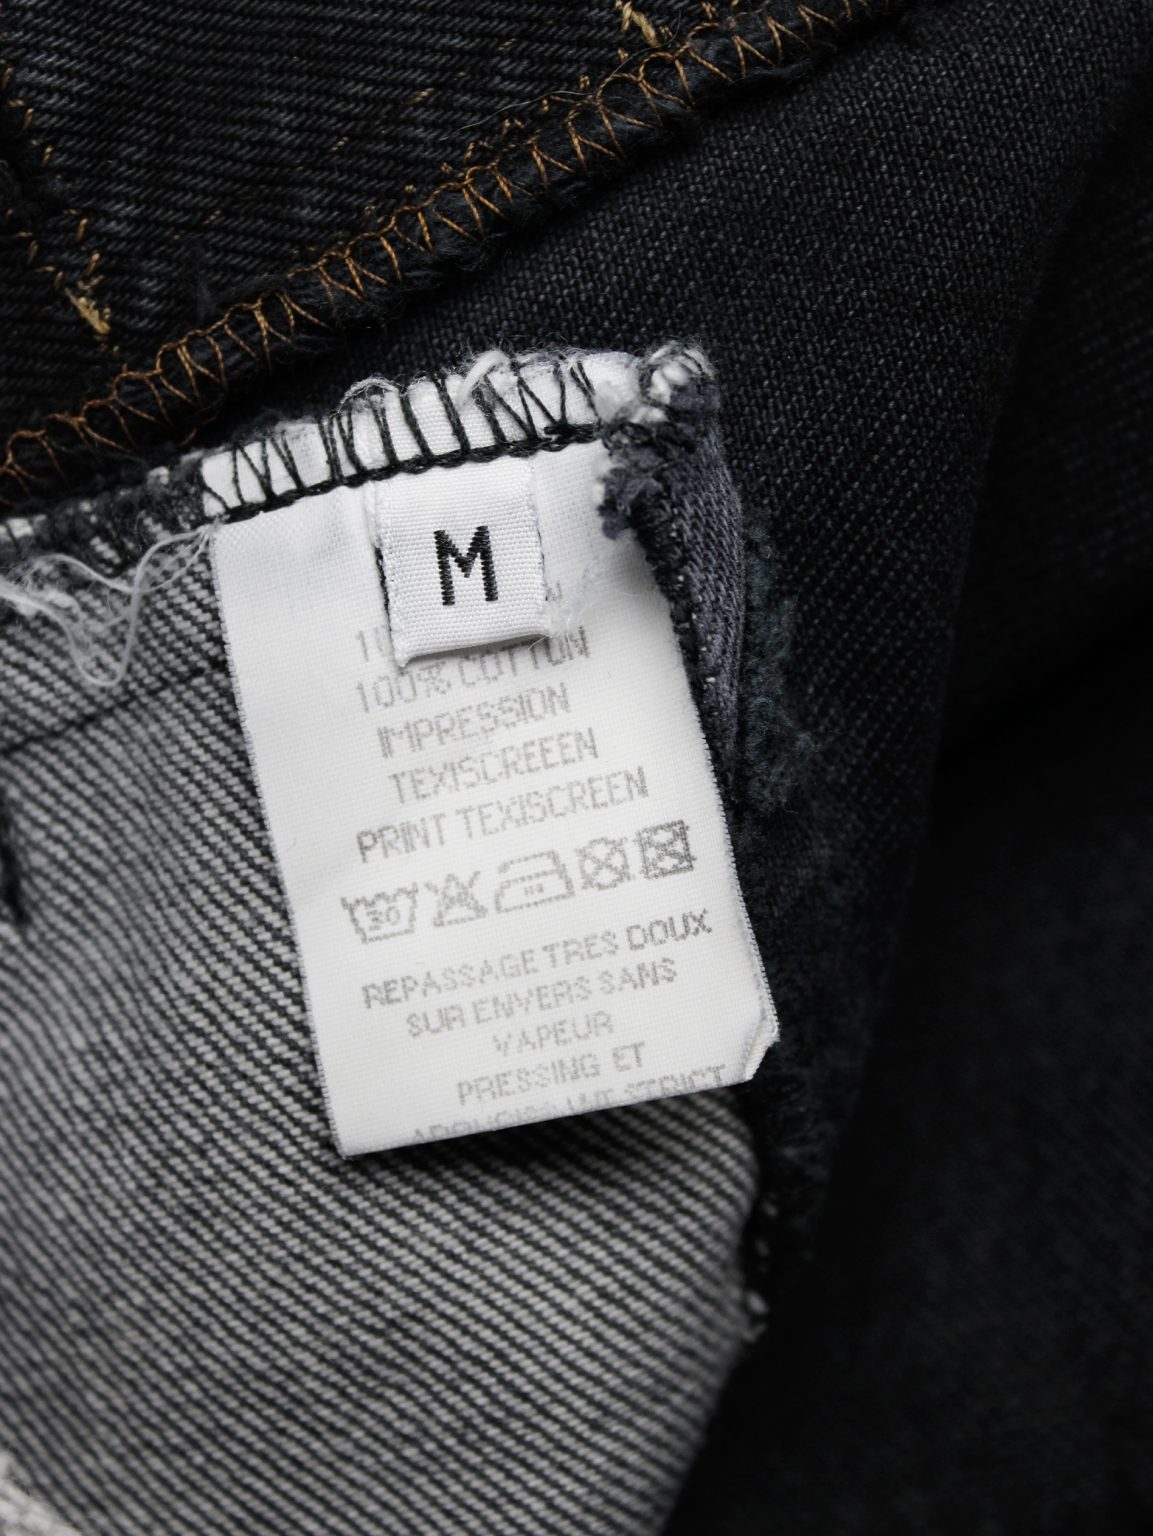 Maison Martin Margiela artisanal denim trousers with cut-off waist and circle print — fall 1998